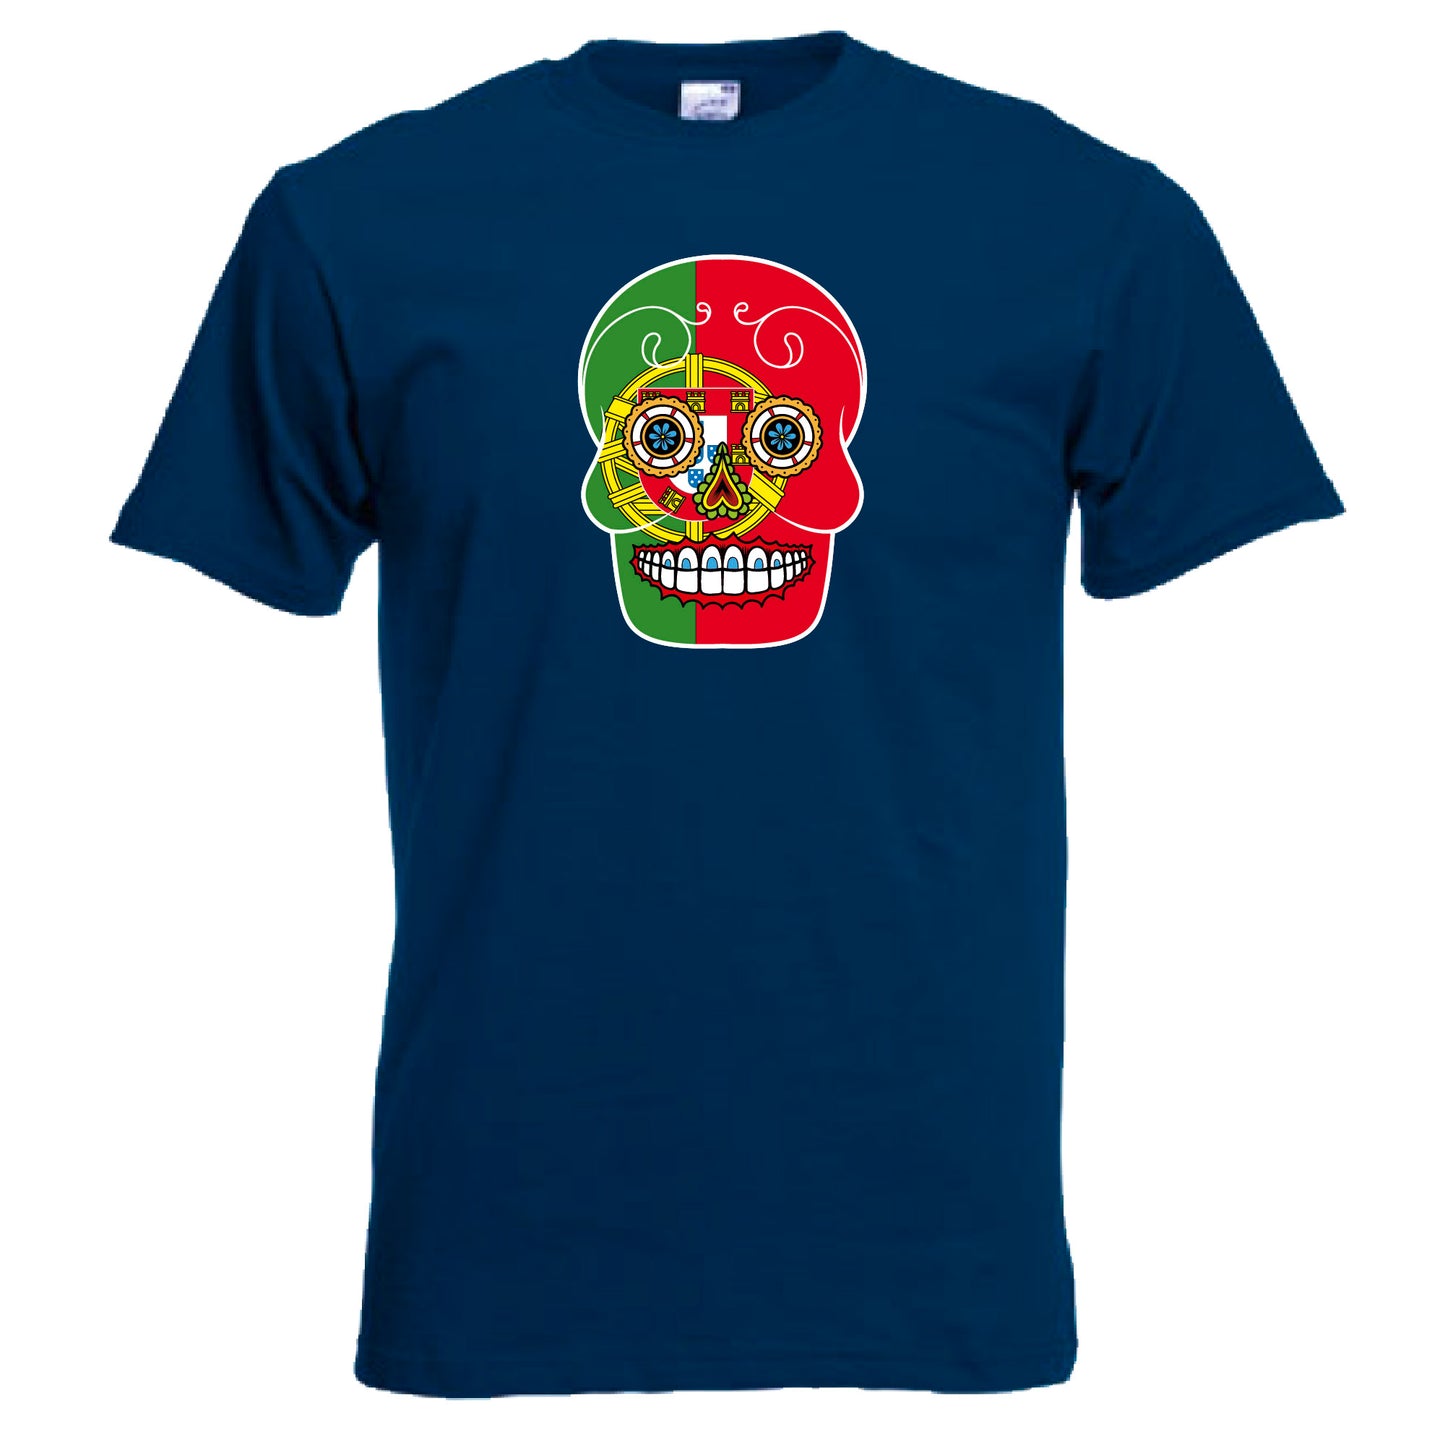 INDIGOS UG - T-Shirt Herren - Portugal - Skull - Fussball